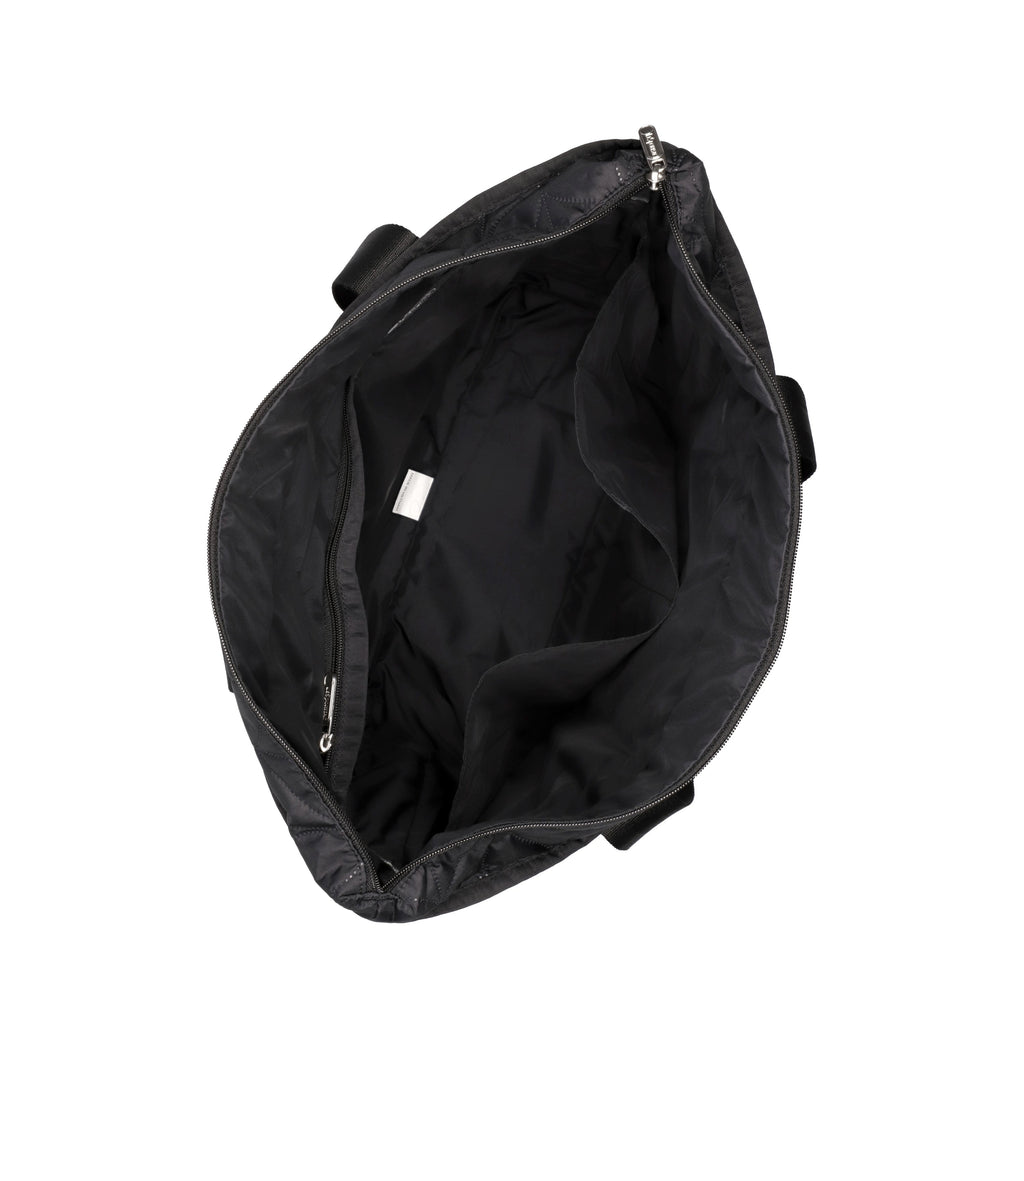 Women's Everyday Xxs Tote Bag in Black